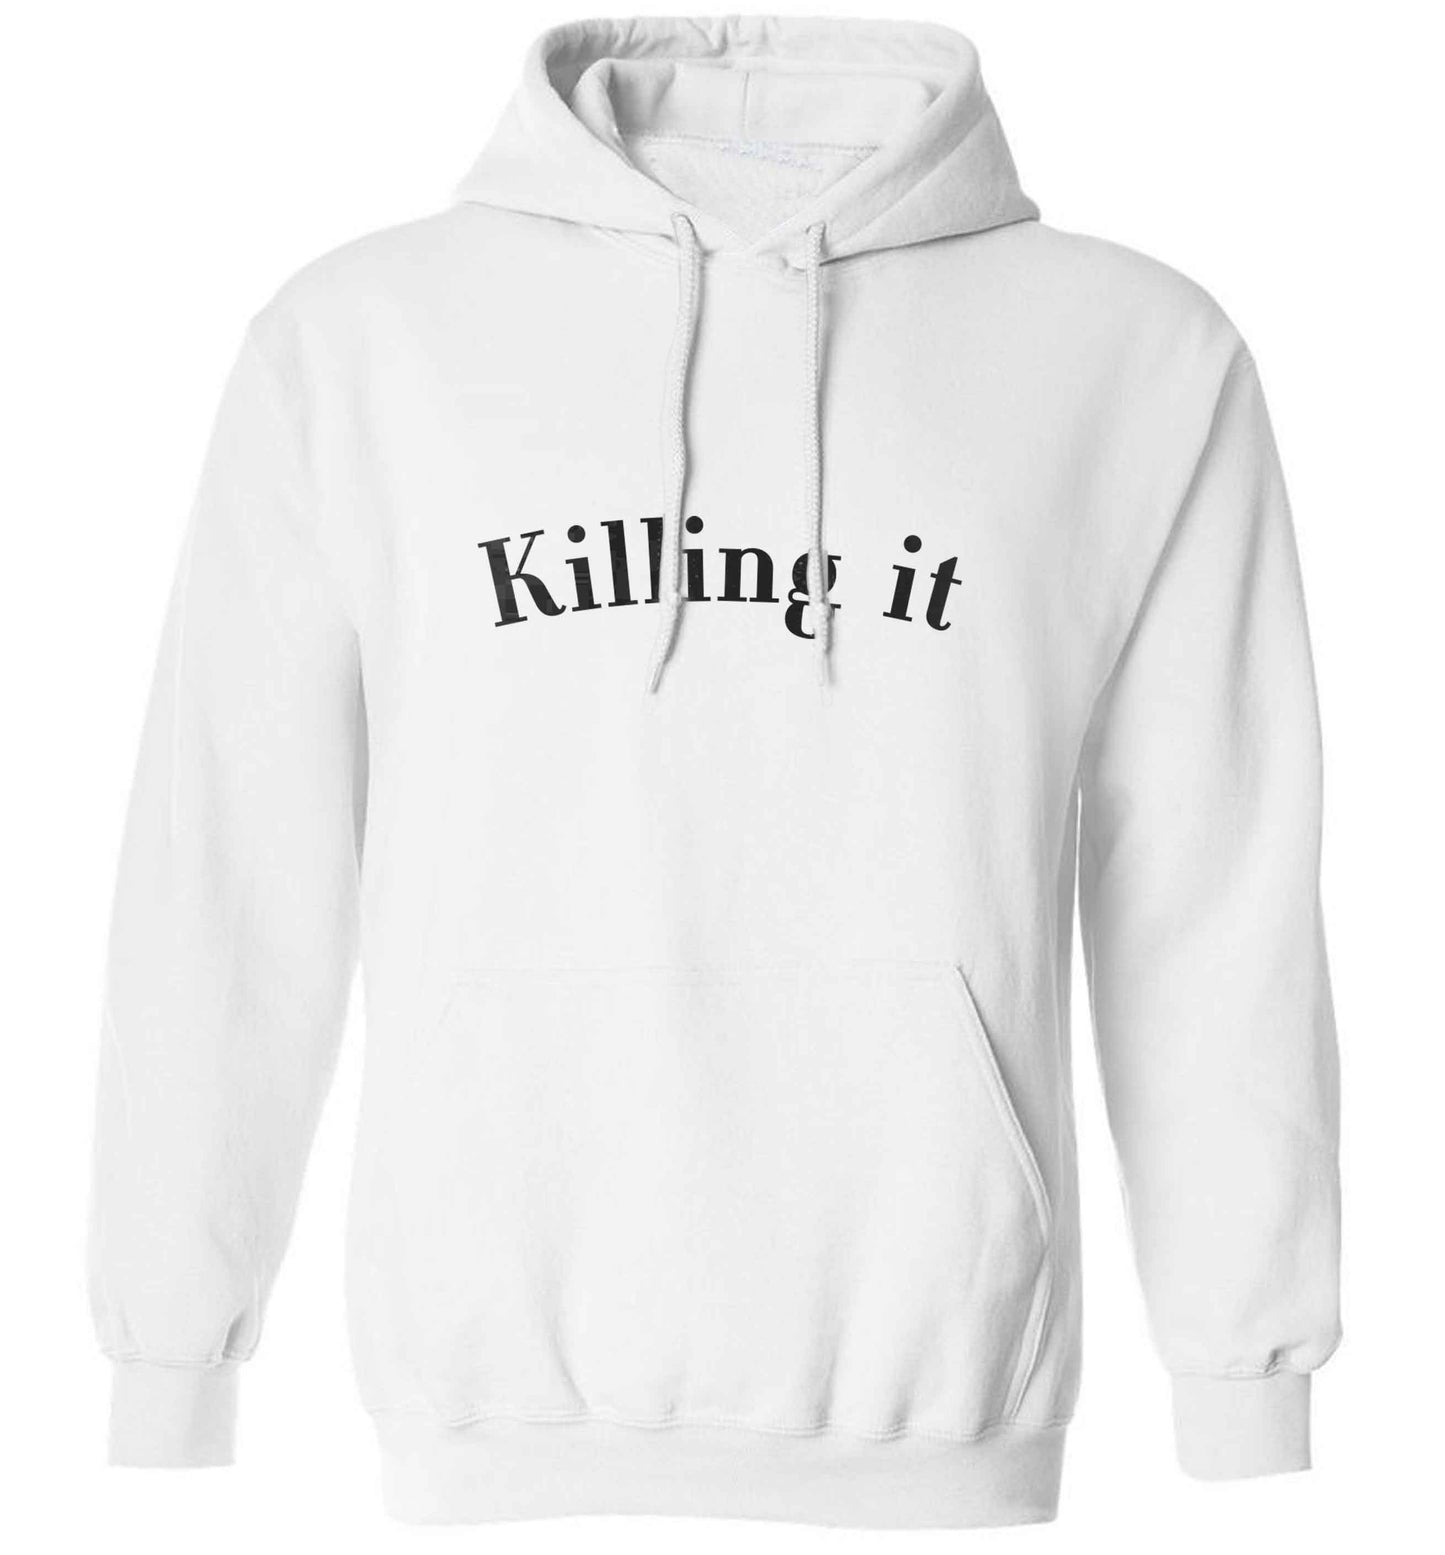 Killing it adults unisex white hoodie 2XL